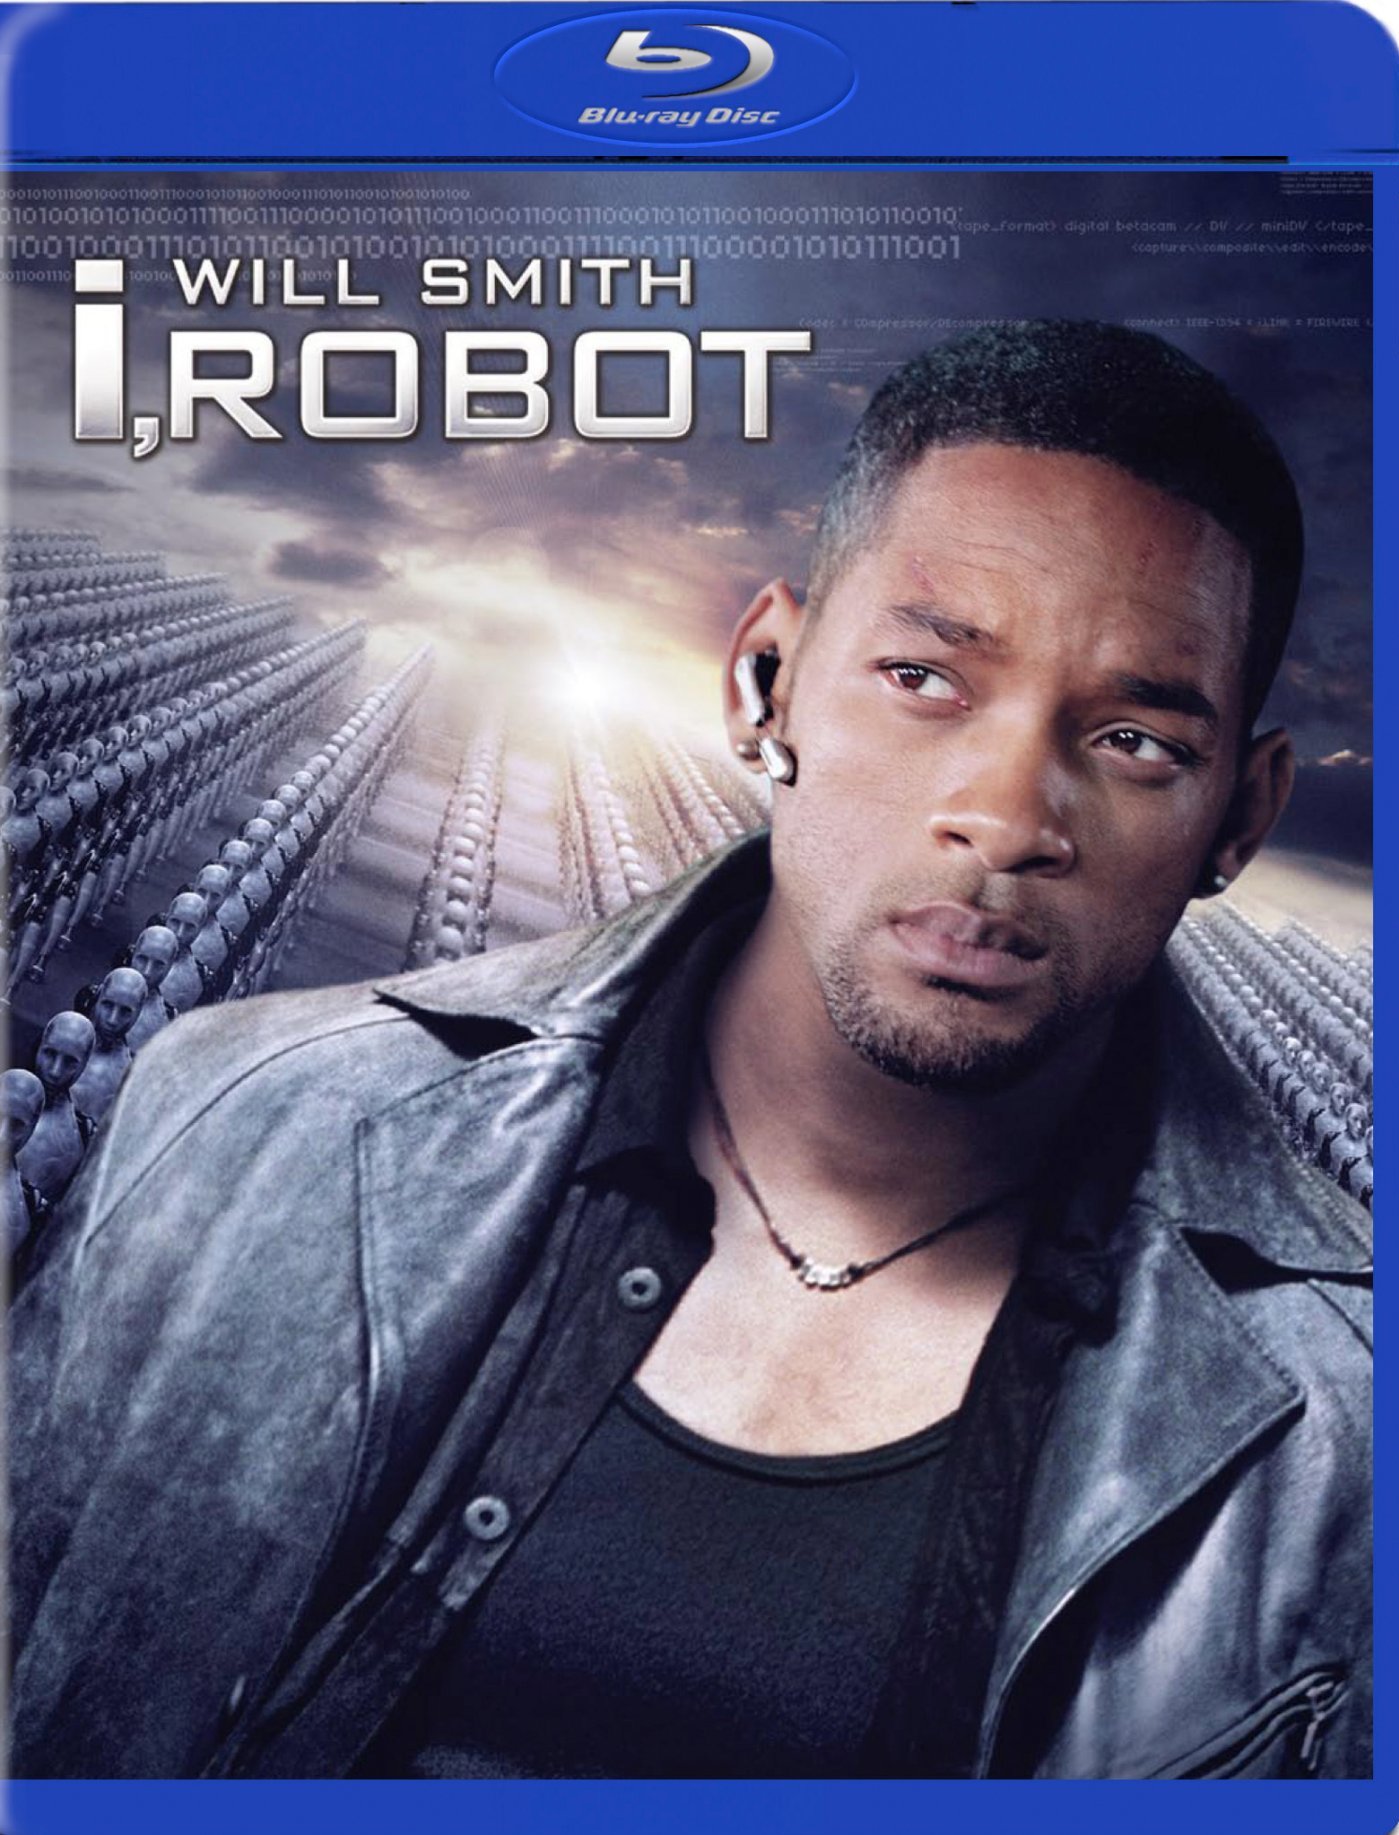 [机械公敌].I,Robot.2004.2D+3D.BluRay.1080p.AVC.DTS-HD.MA.5.1-DIY@jxkyyp   42.13G. t/ G$ \+ k! k" [$ o$ I& N-1.jpg